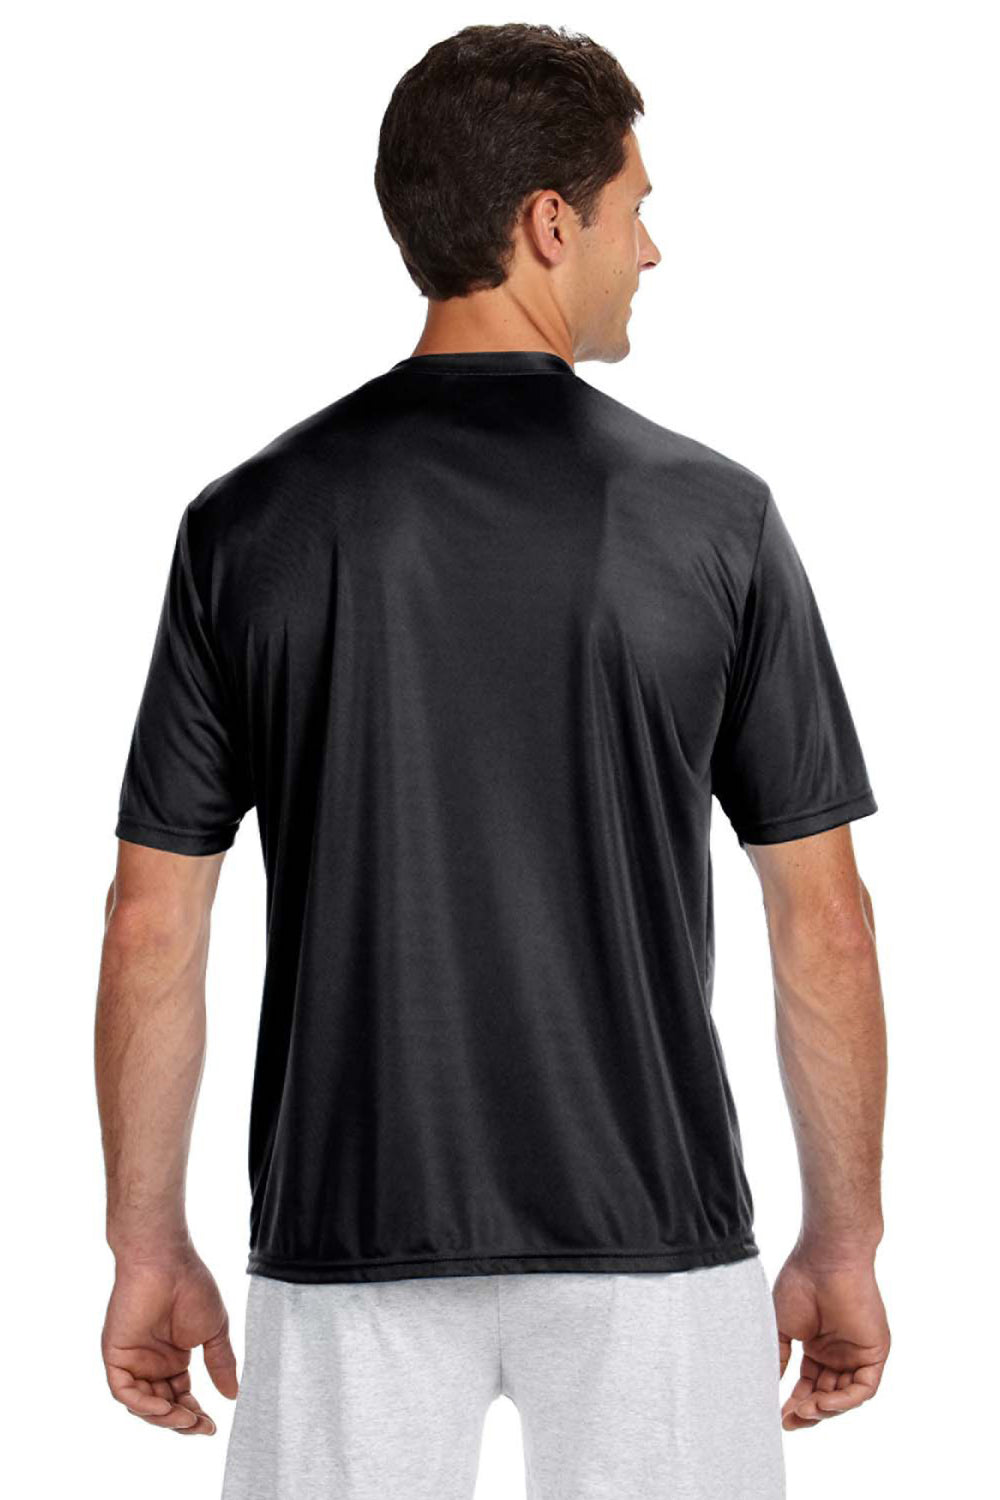 A4 N3142 Mens Performance Moisture Wicking Short Sleeve Crewneck T-Shirt Black Model Back